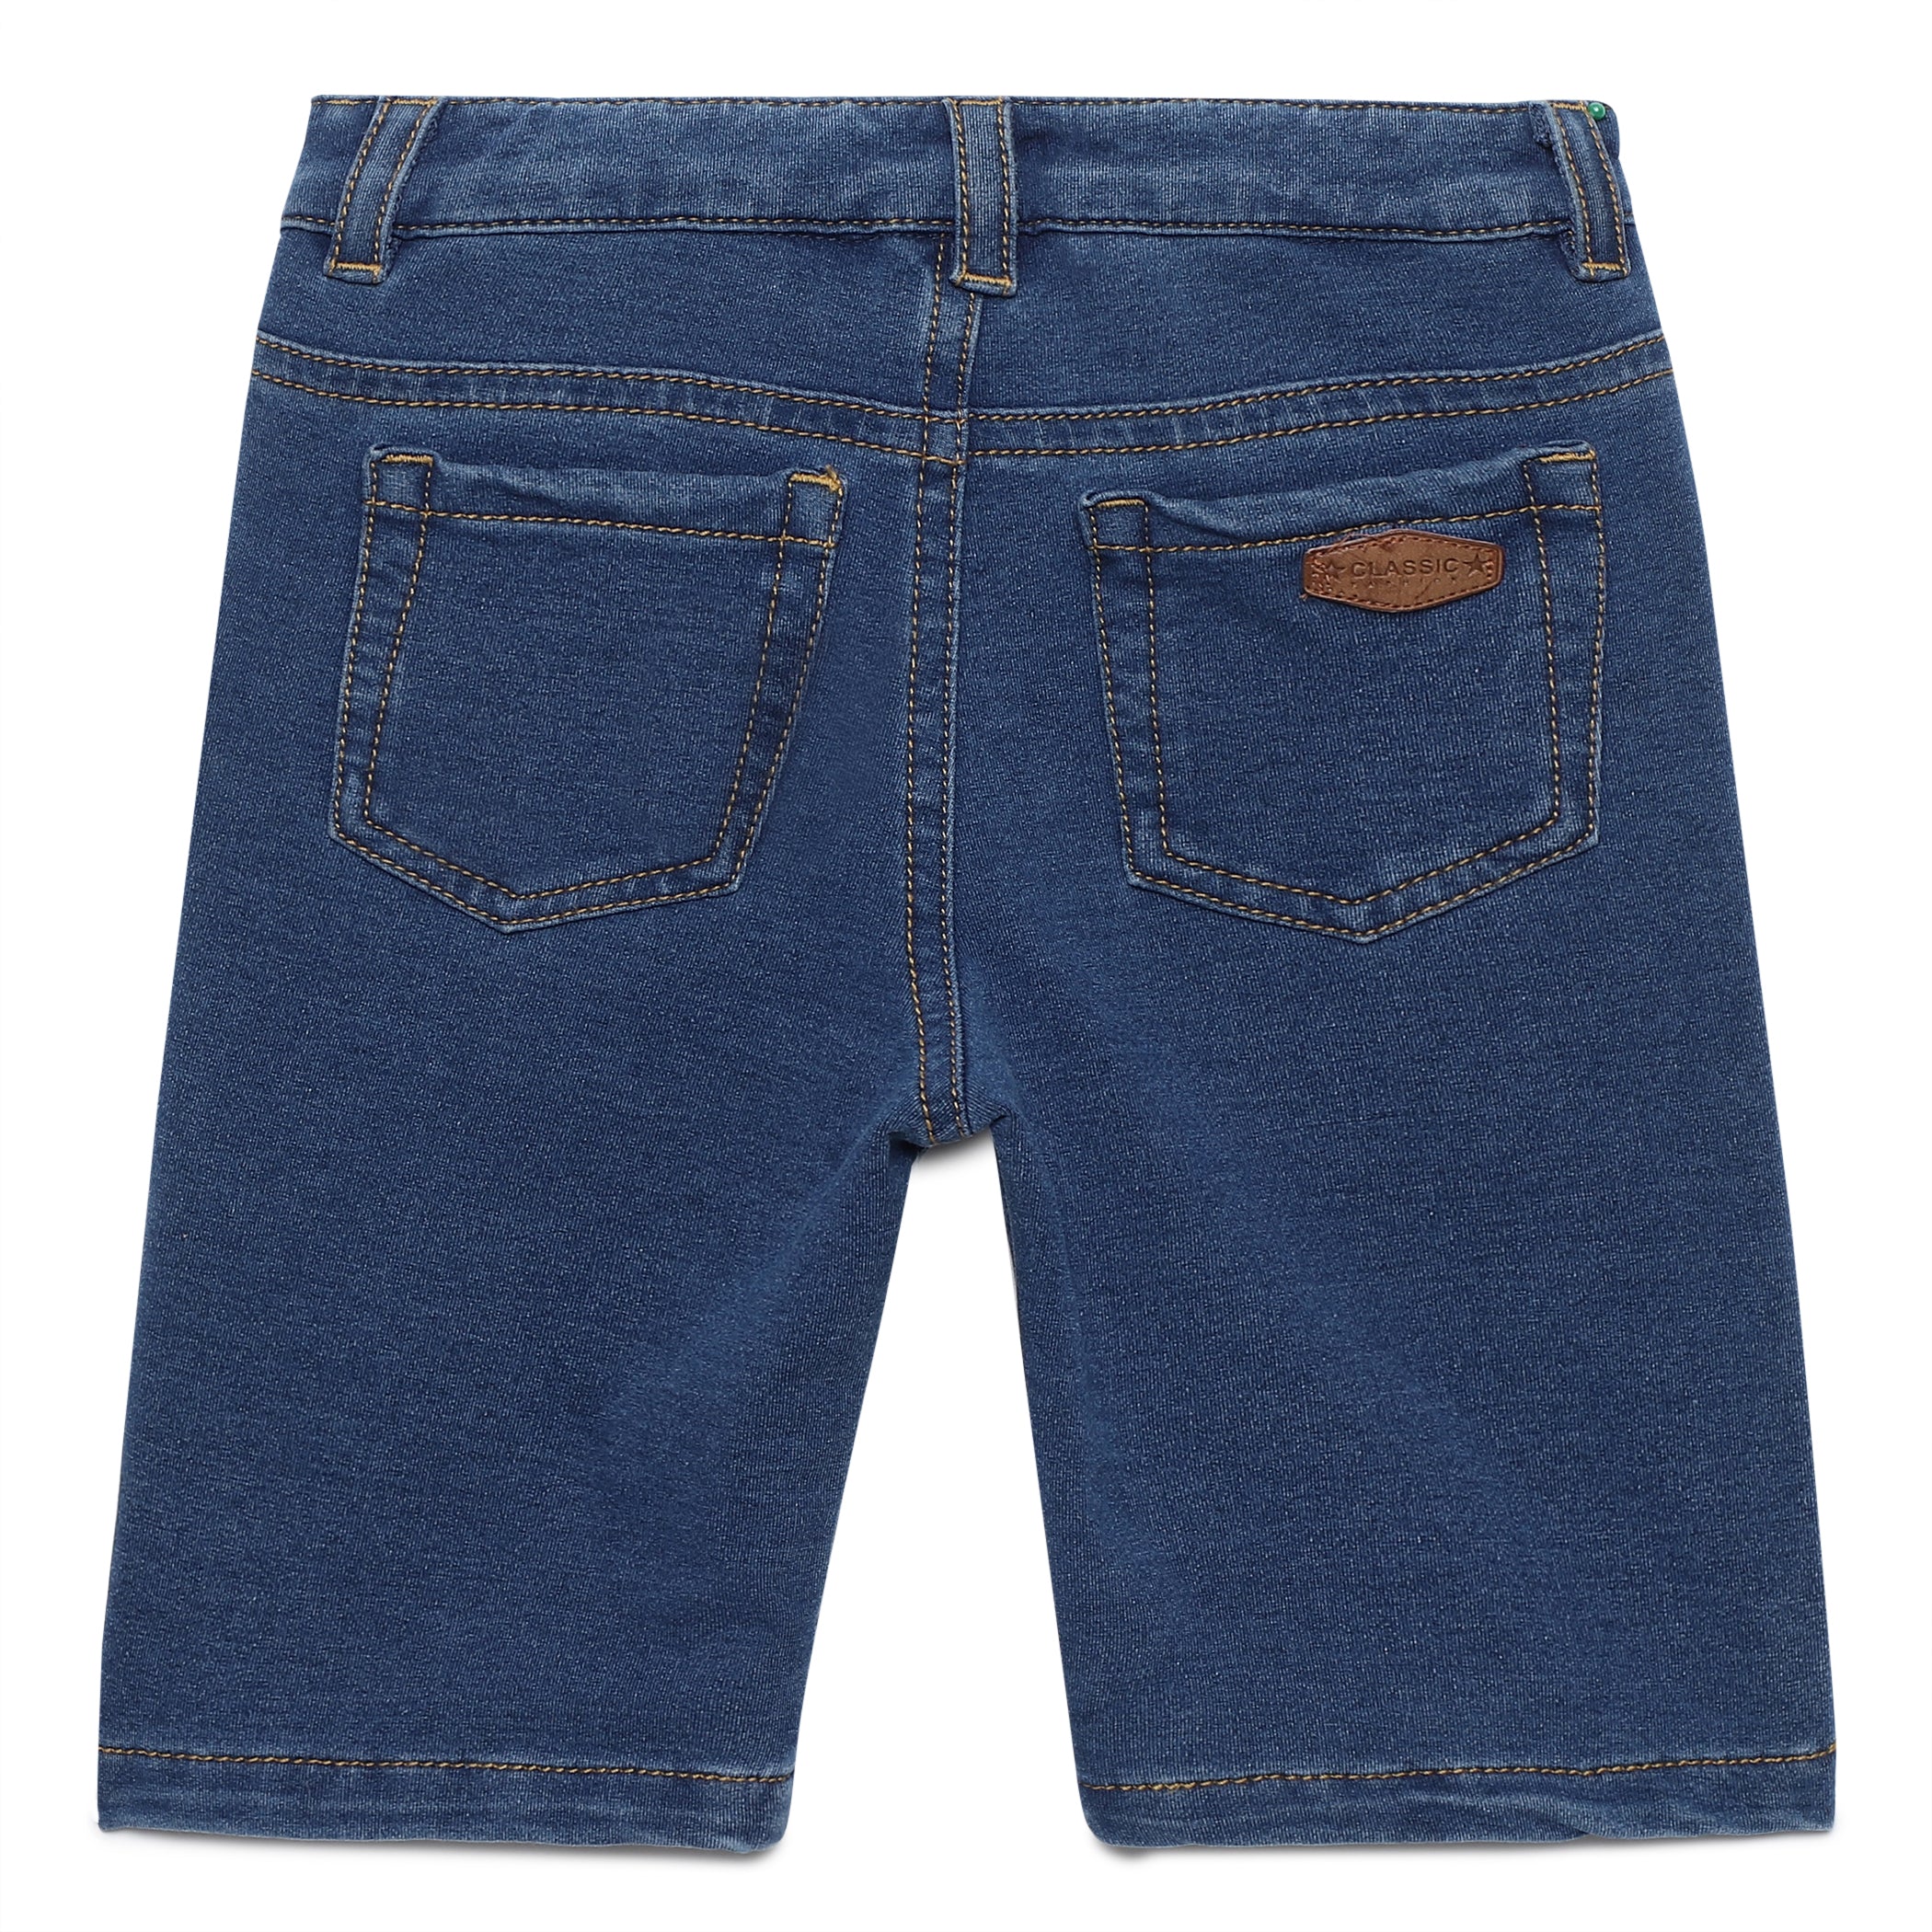 Baby Boys Knitted Denim Blue Shorts